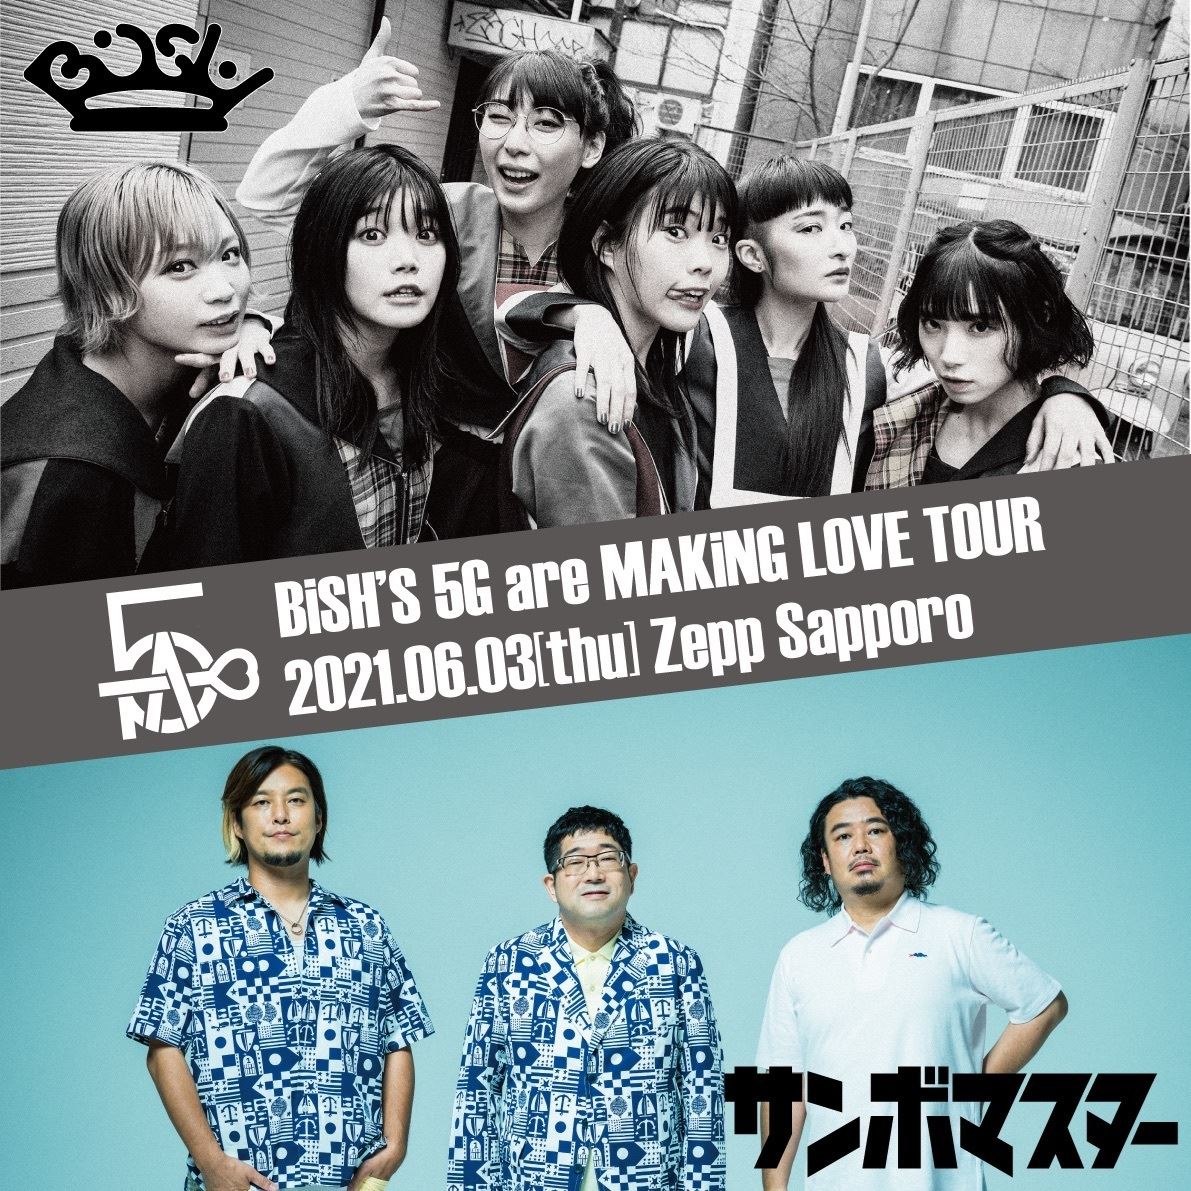 『BiSH’S 5G are MAKiNG LOVE TOUR』6月3日公演 告知画像